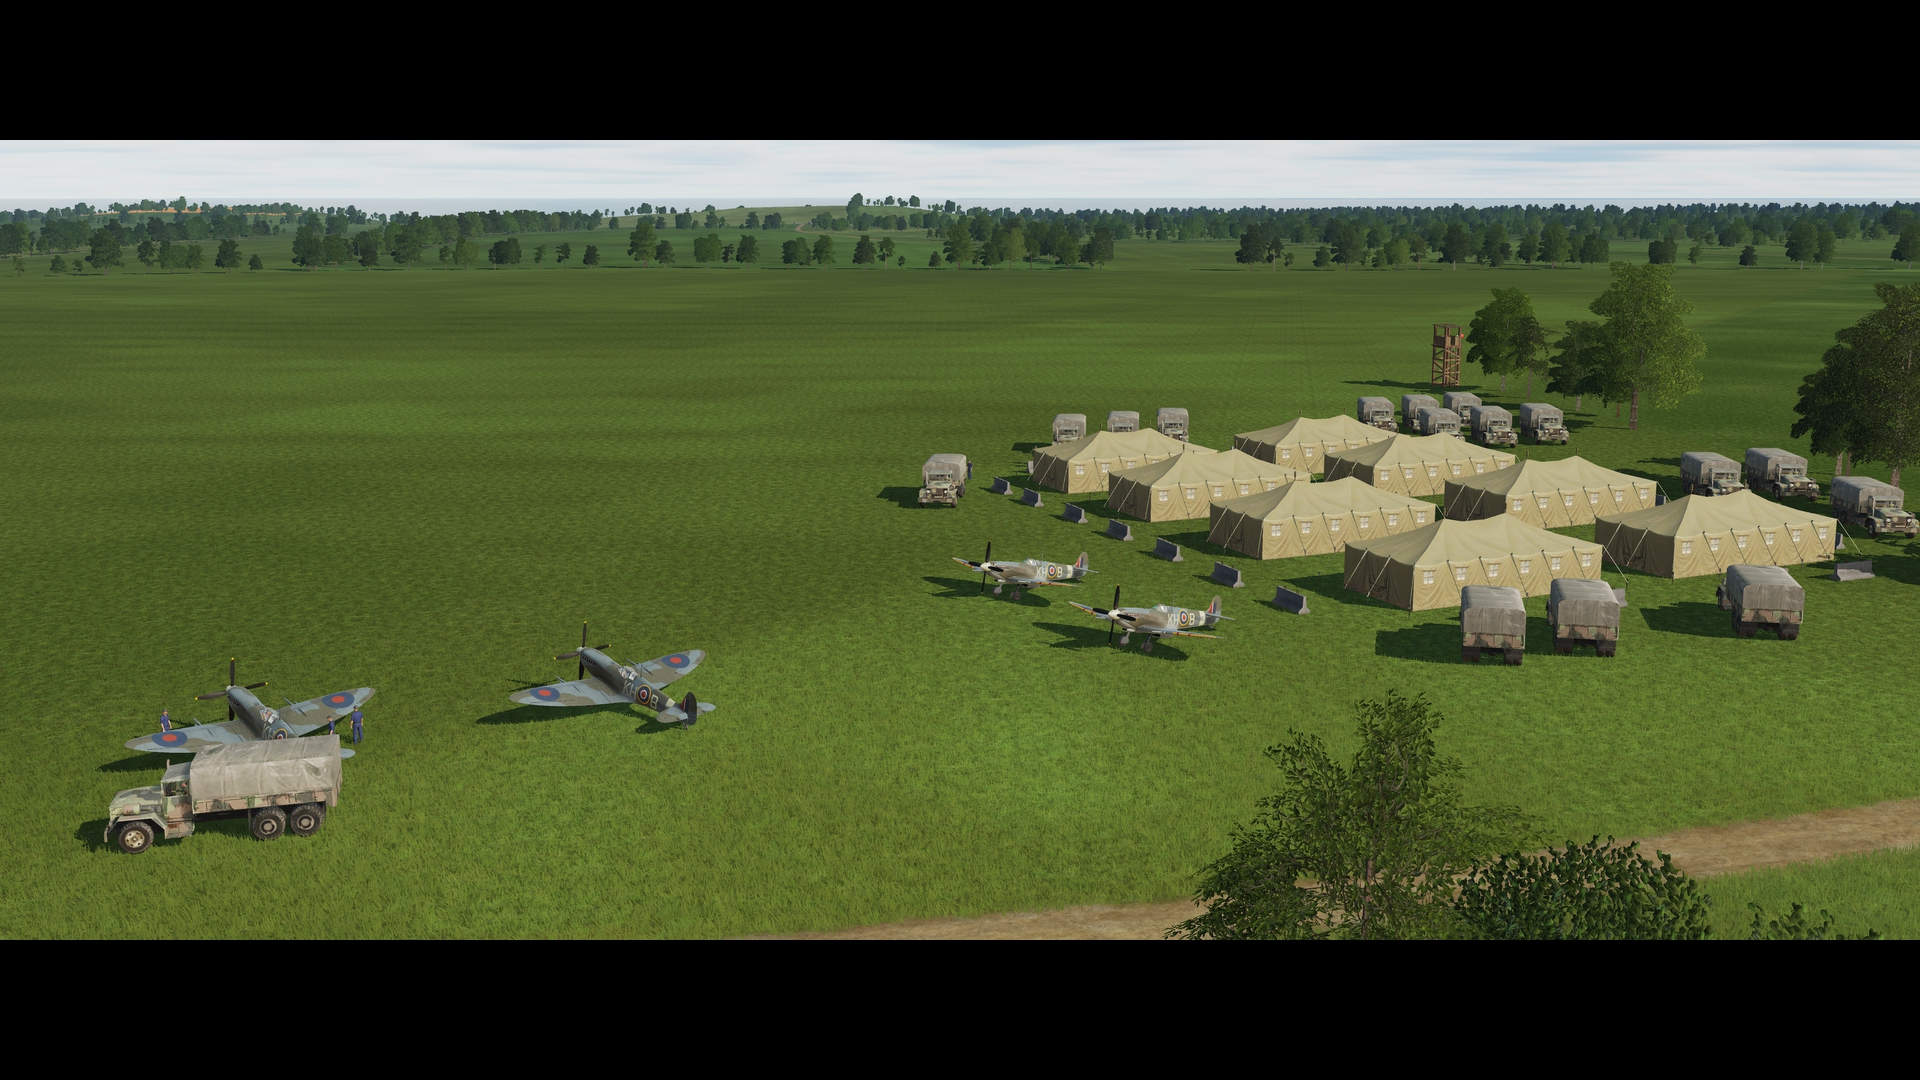 Operation Jubilee - FARP TRAINING, Bombing, Takeoff and Landing.